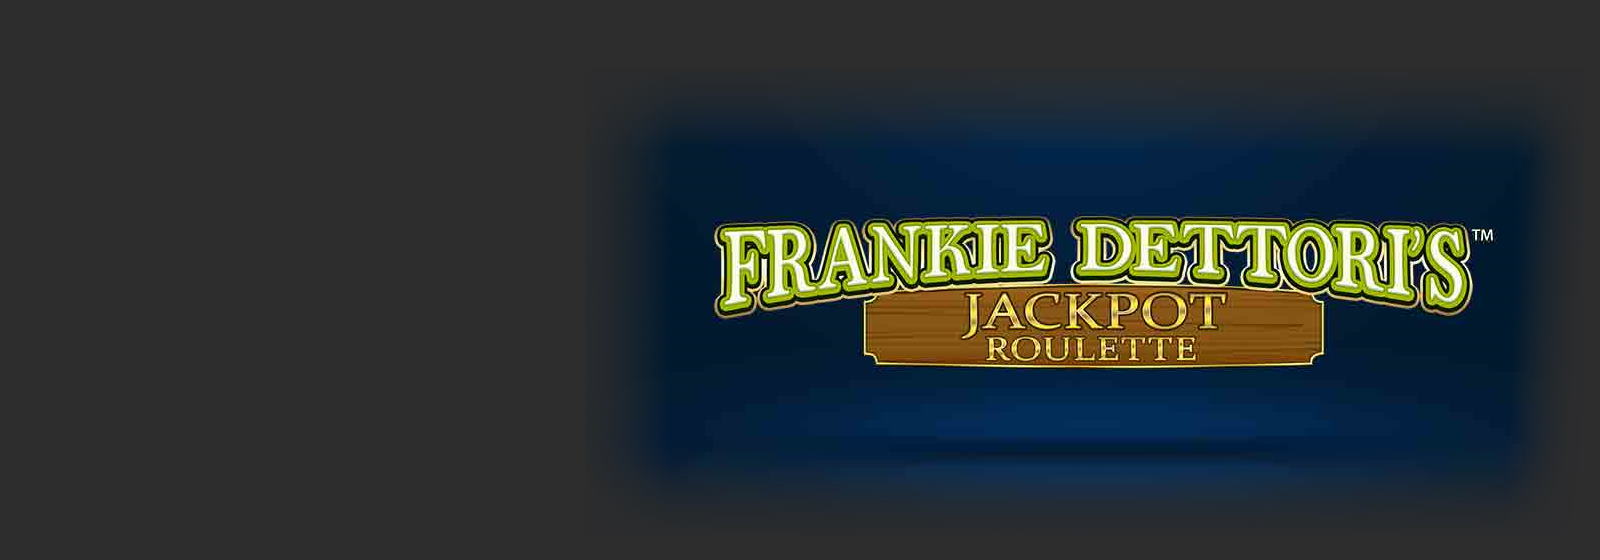 frankie dettori's jackpot roulette